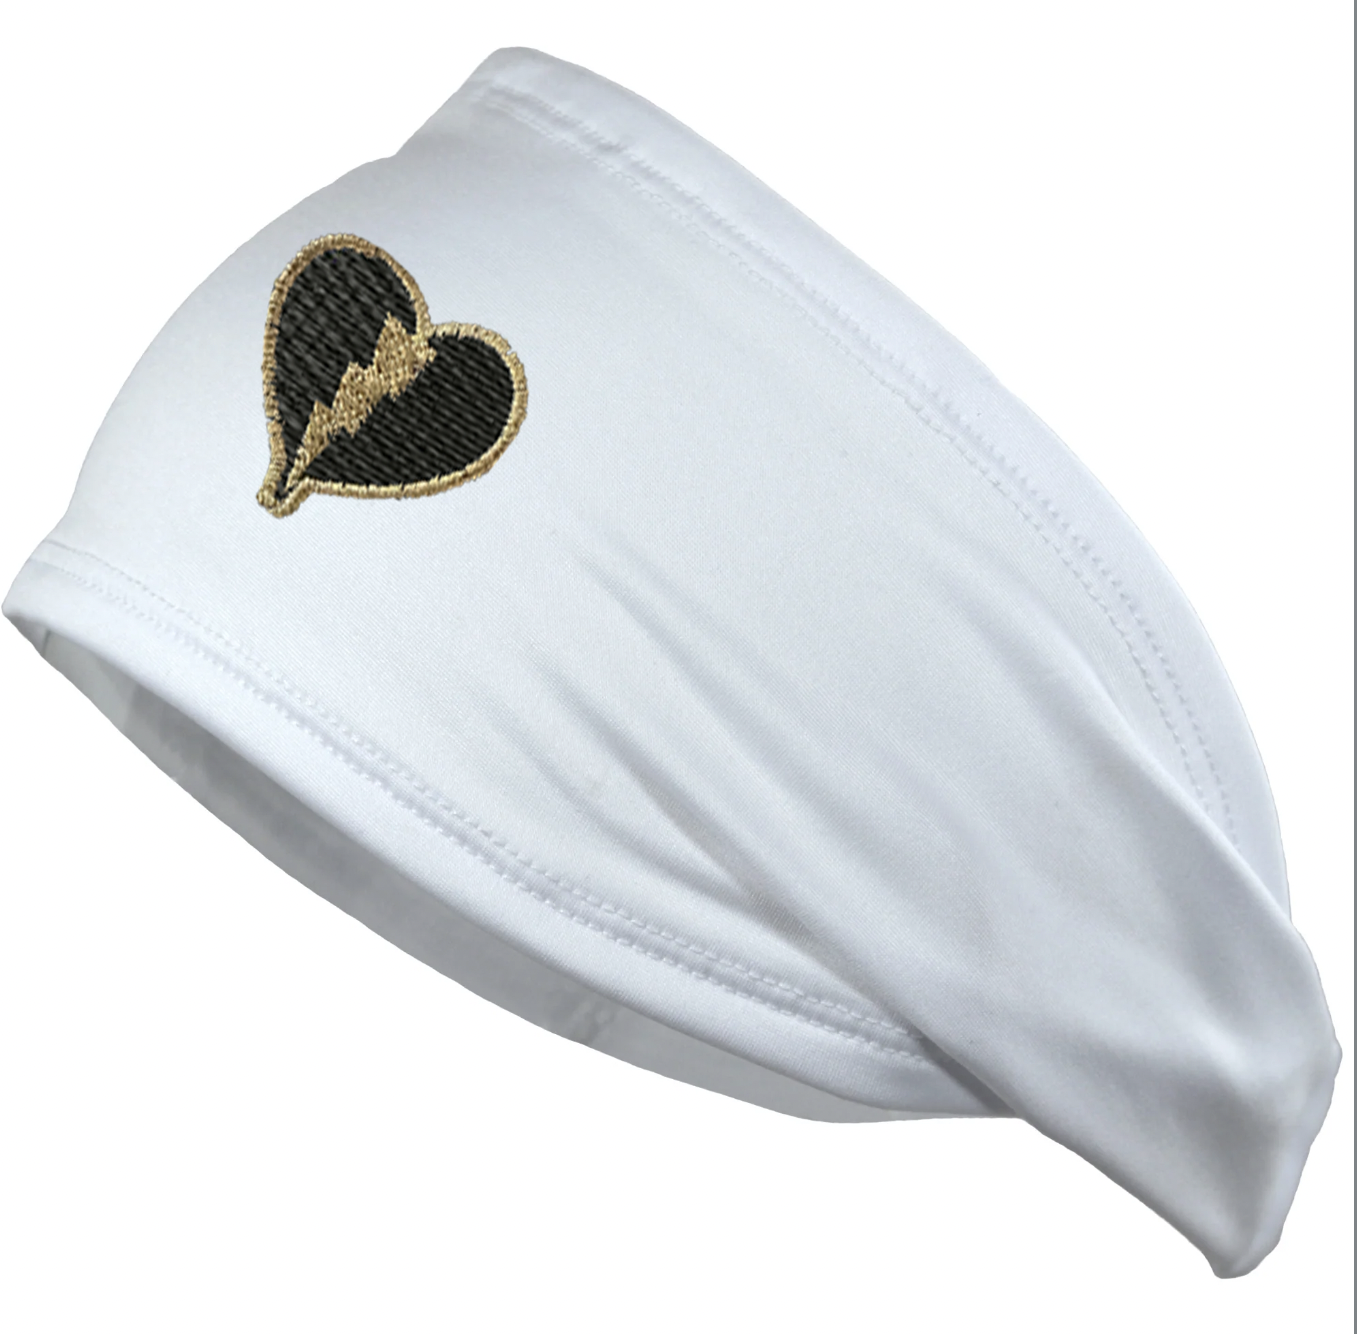 Gold Heart Clothing Performance Sports Headband